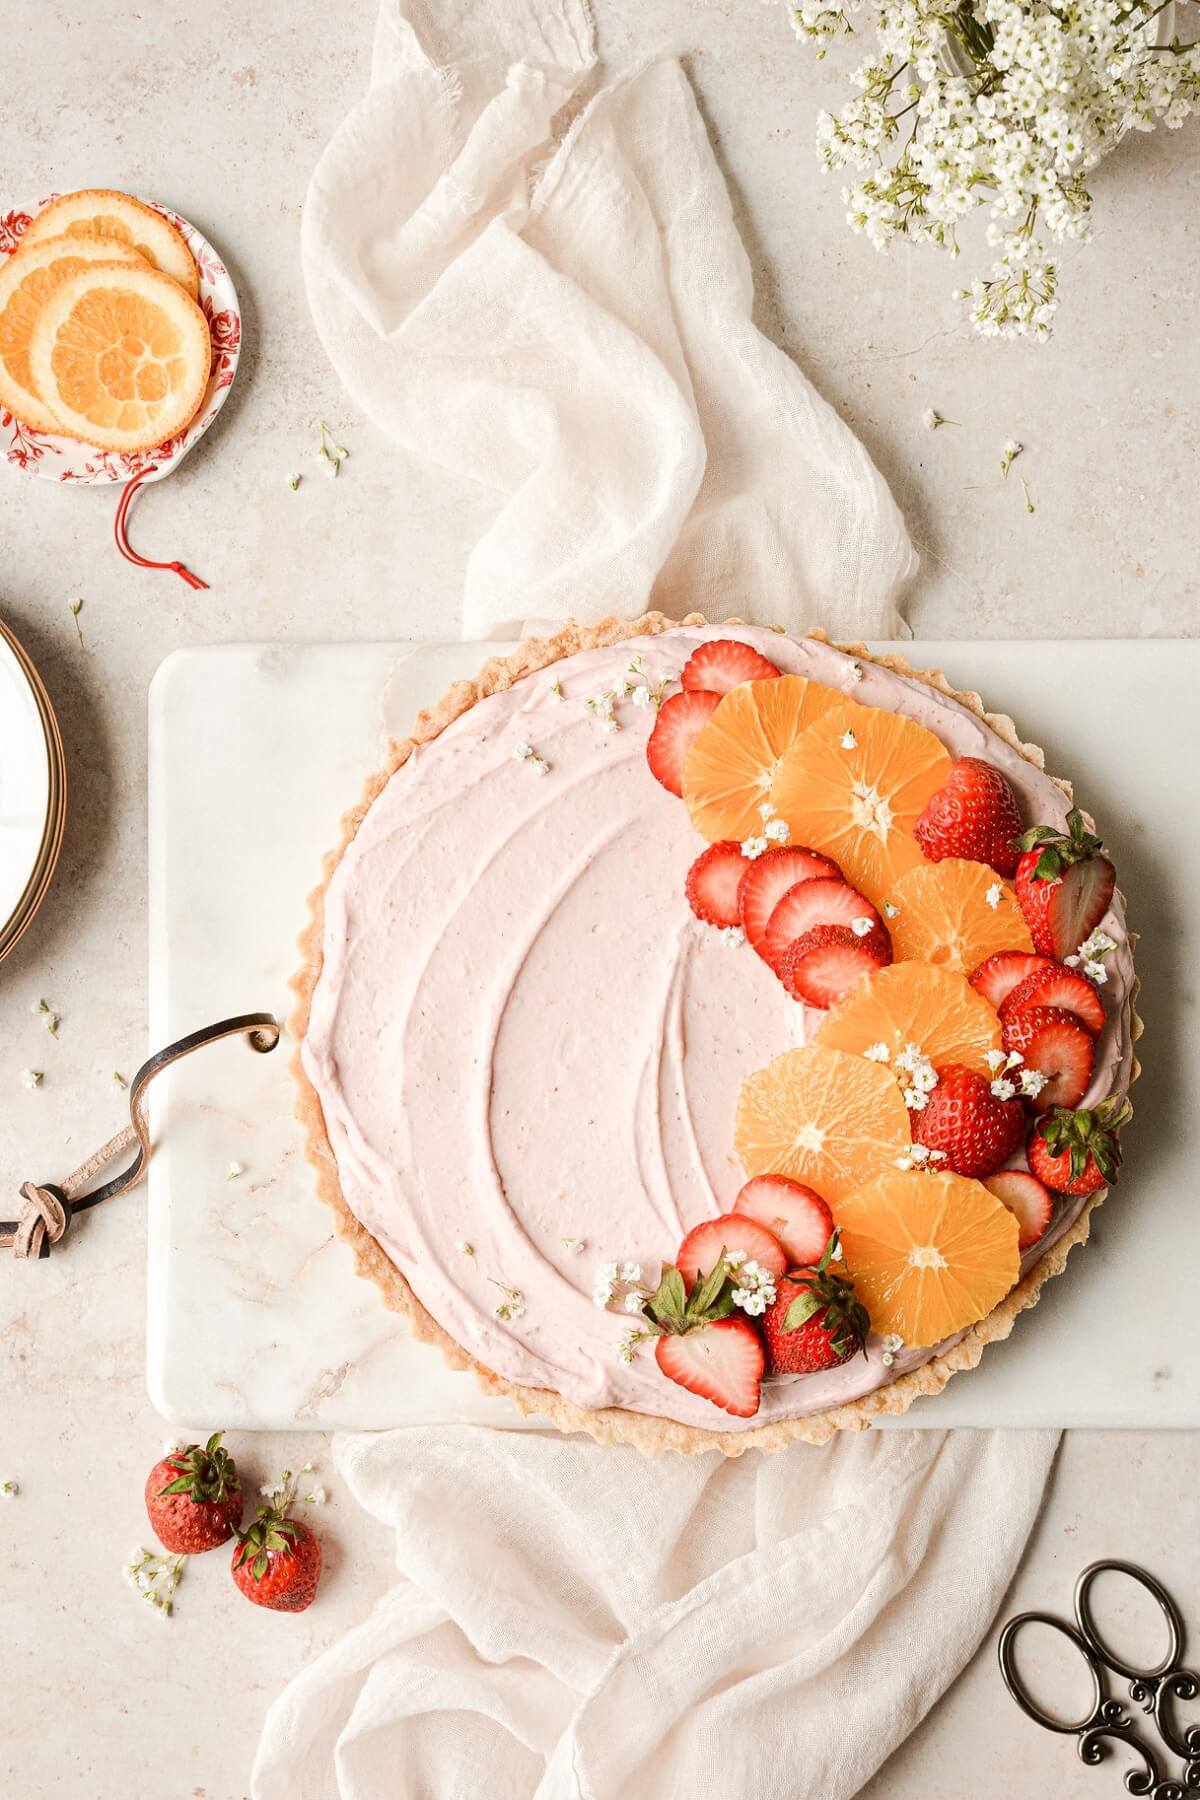 Strawberry orange cream pie decorated with sliced oranges and strawberries.